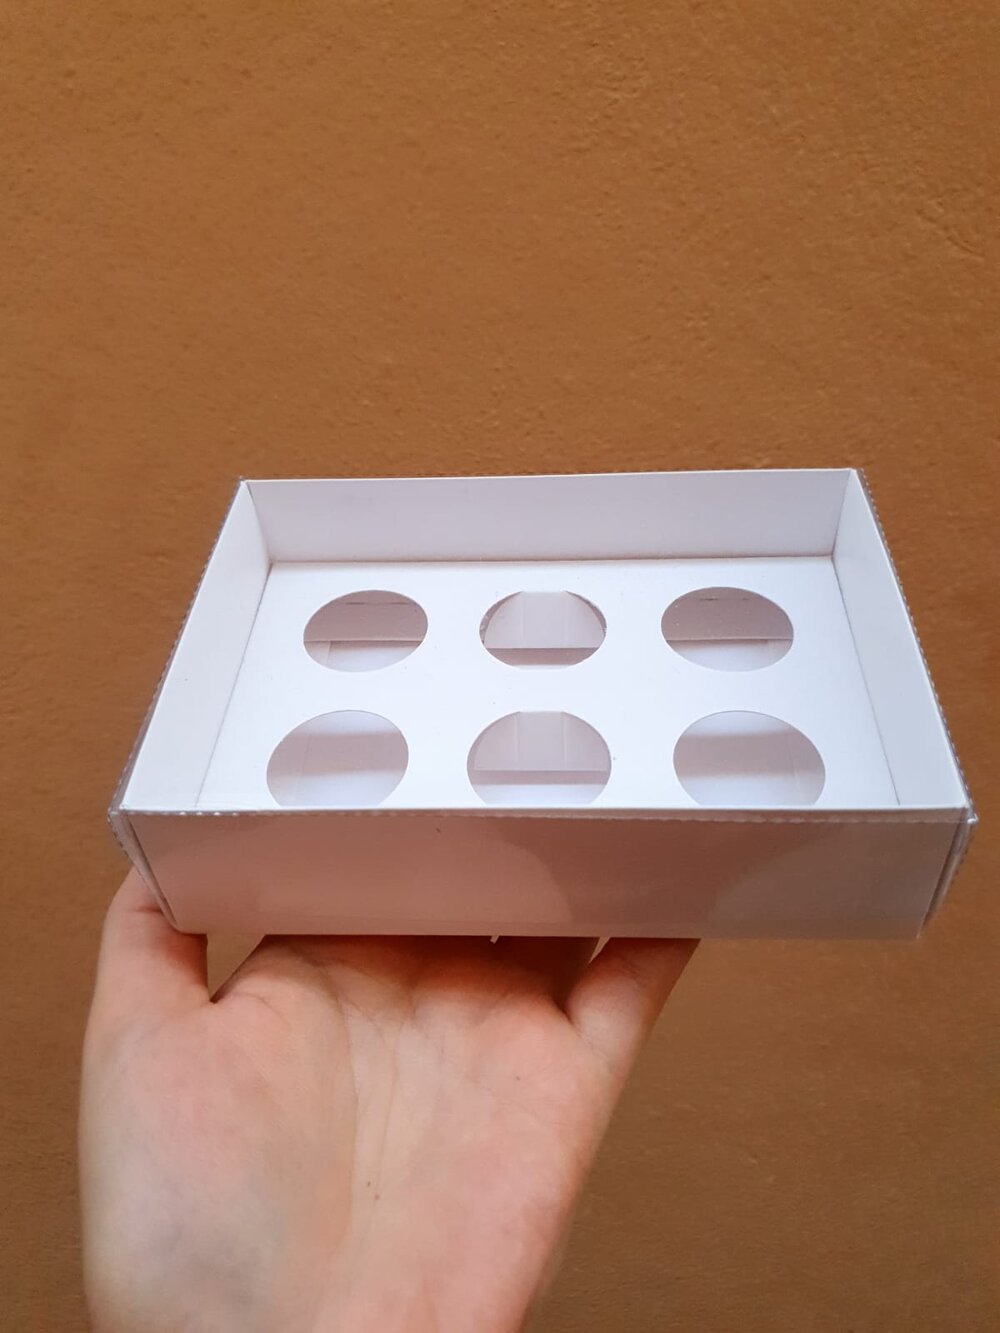 10 PACK- 6 Brigadeiros Box - Truffle -Bonbon Box (2 Insert Sizes)